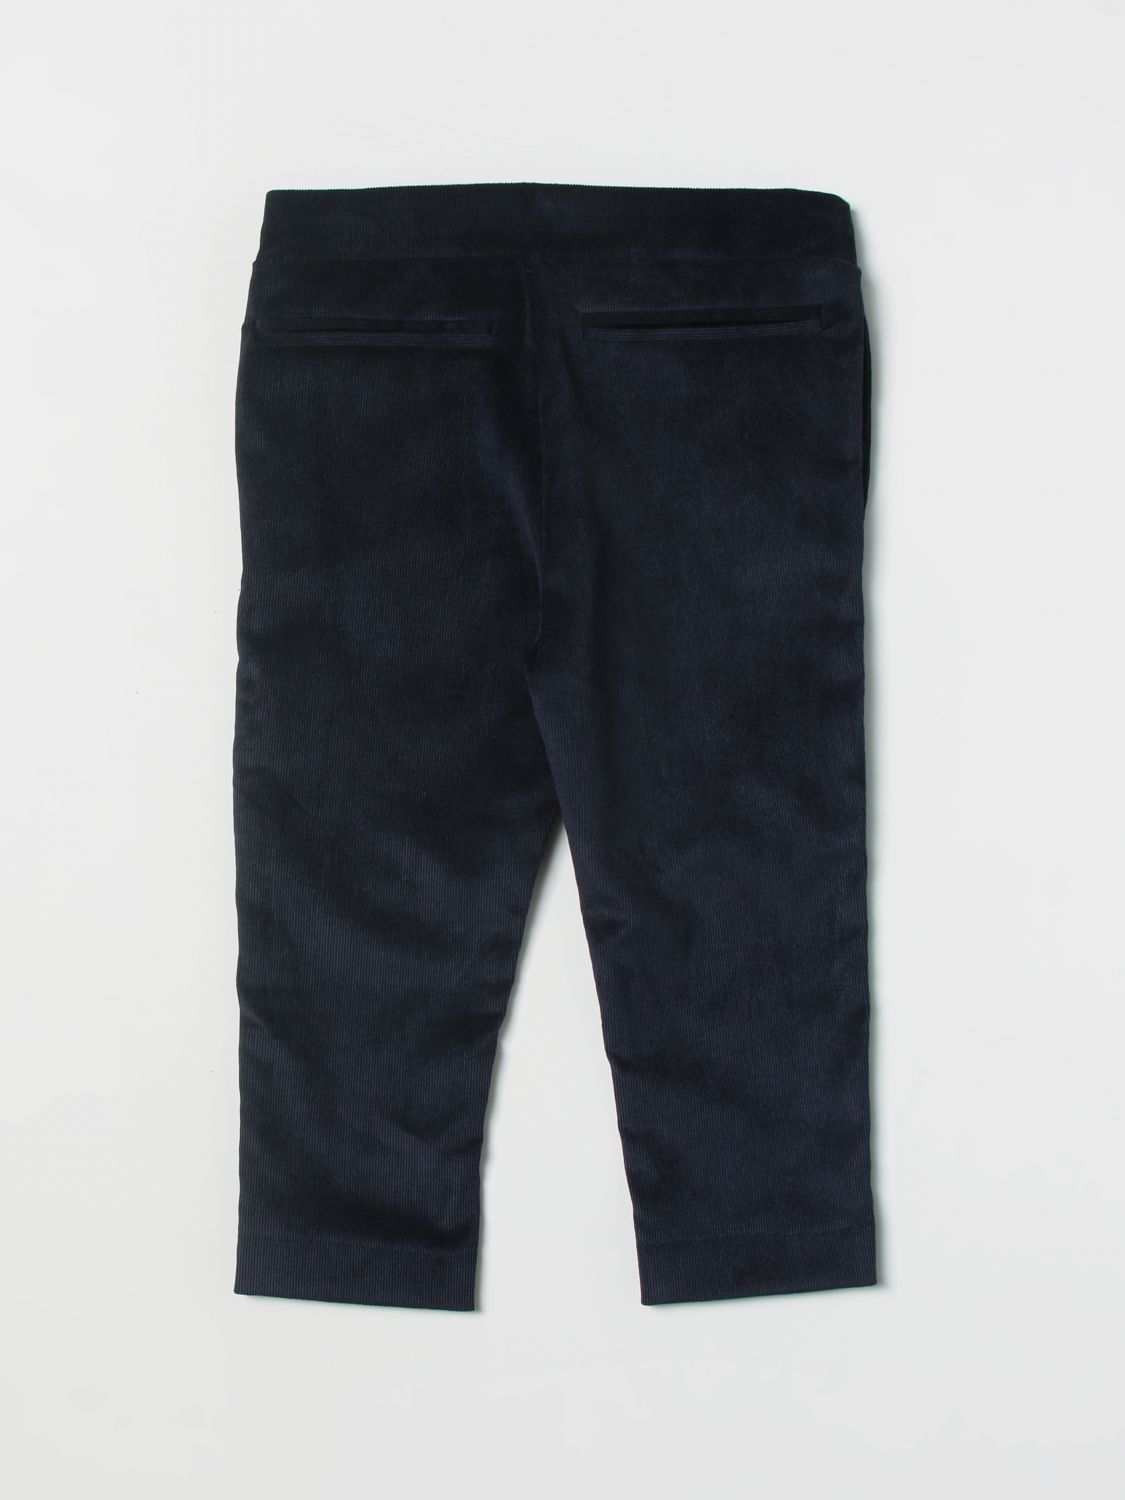 Pants La Stupenderia: La Stupenderia pants for boys blue 2